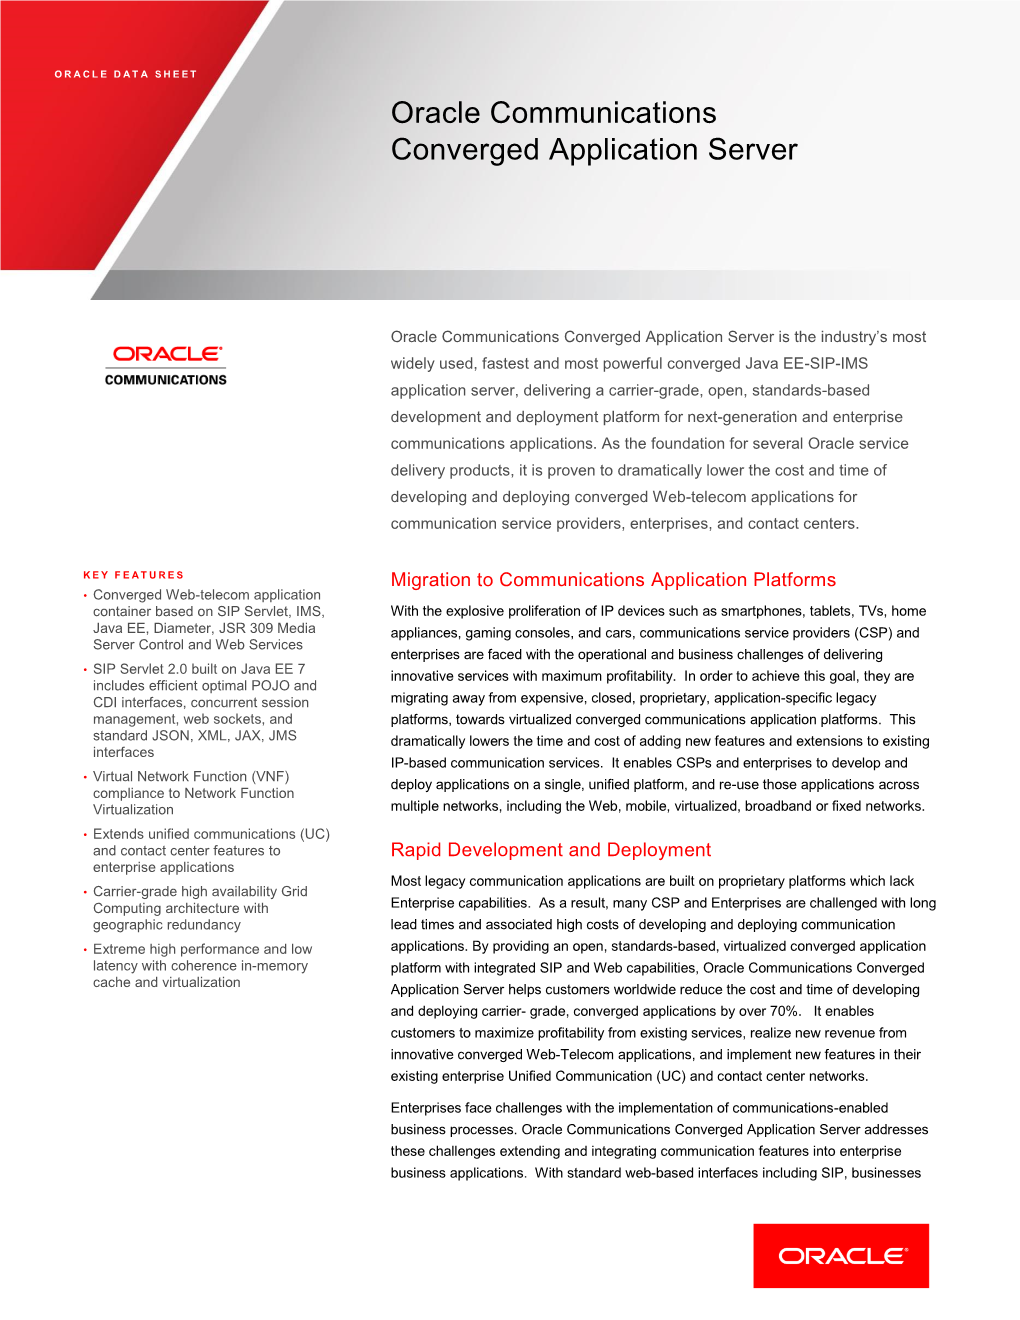 Oracle Communications Converged Application Server Datasheet